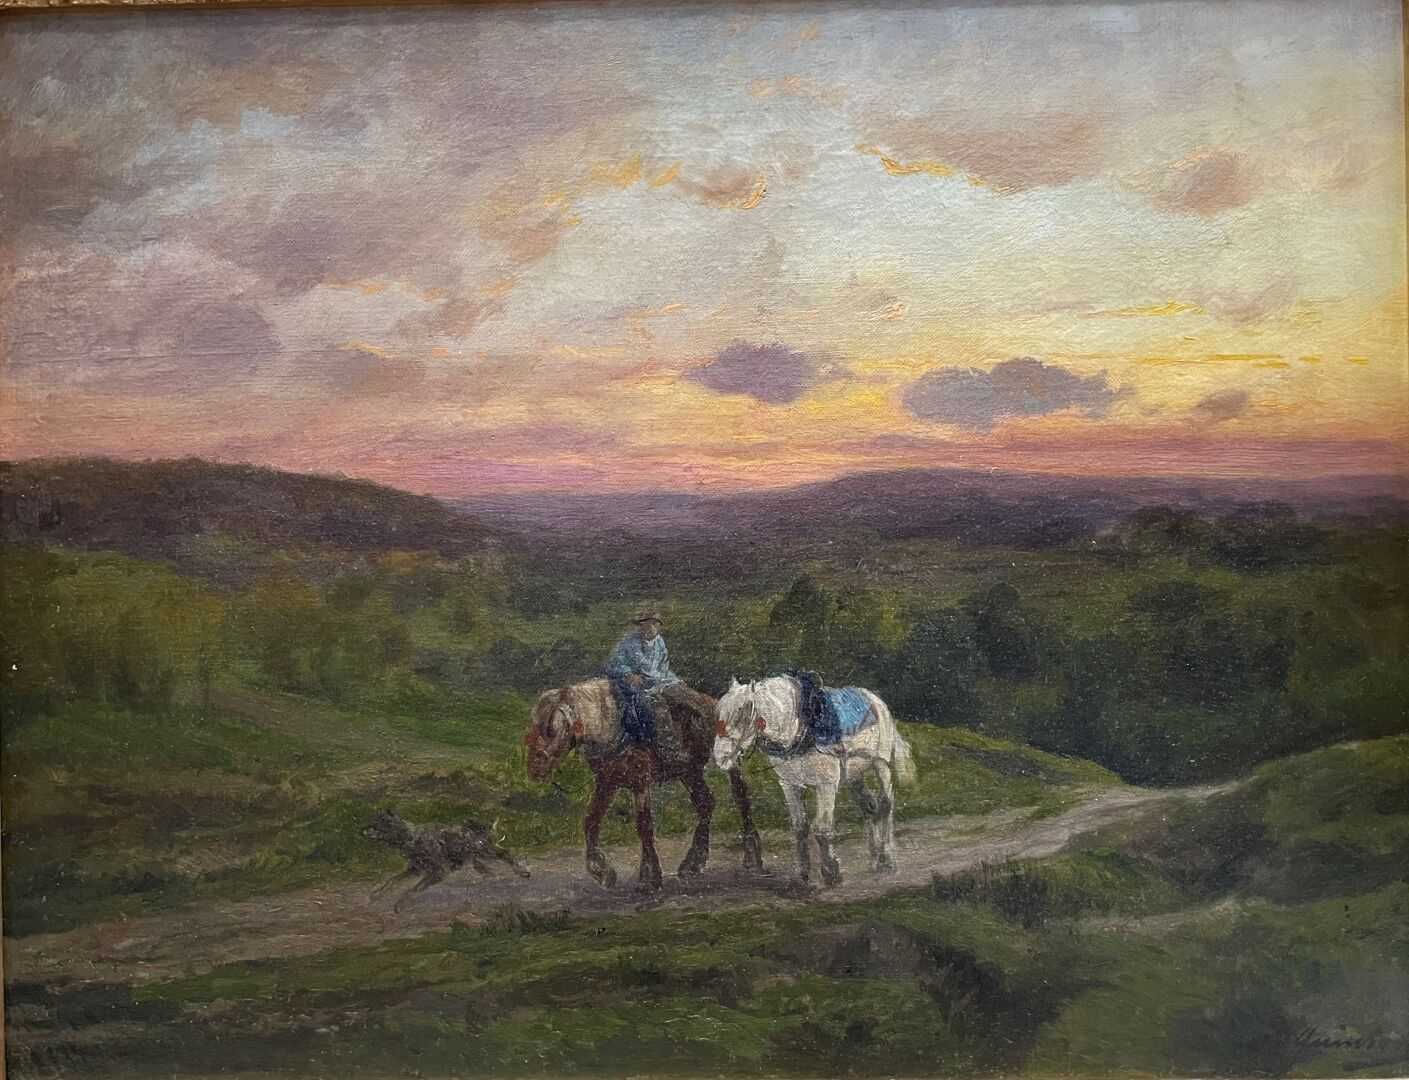 Null 克雷芒-金顿(1851-1920)

来自田野的回报

布面油画，右下角有签名。

50 x 65厘米